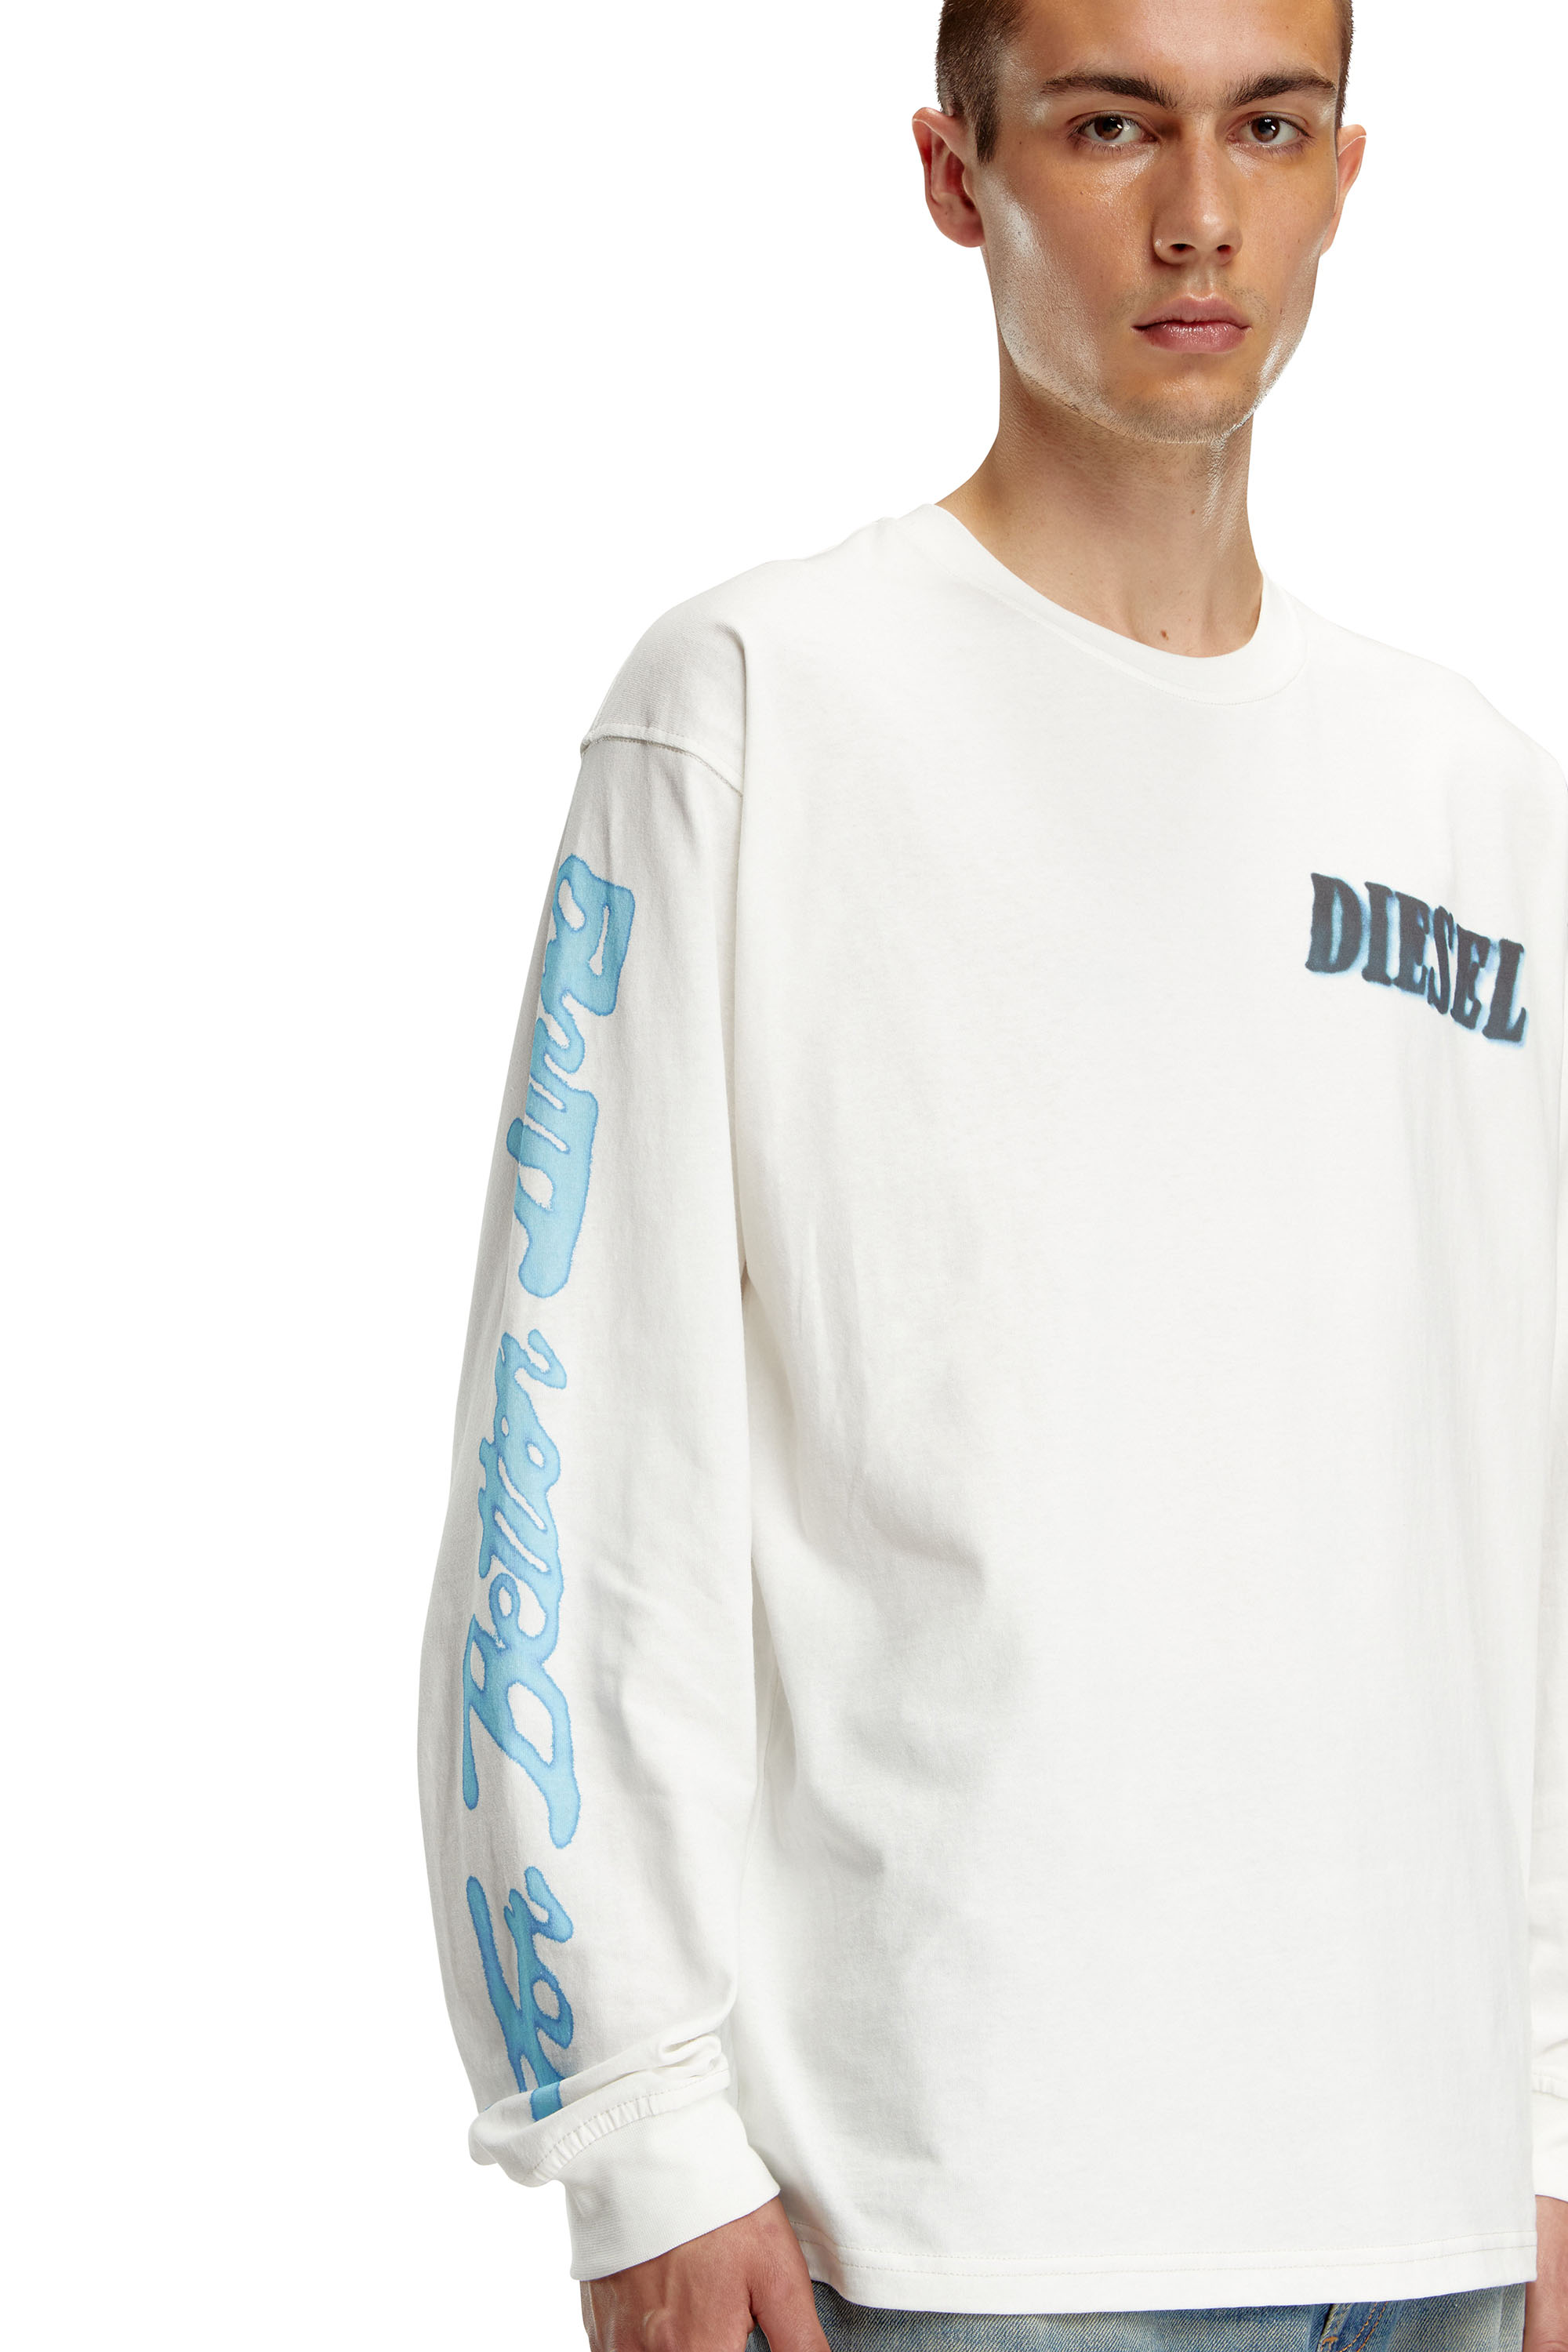 Diesel - T-BOXT-LS-Q15, Hombre Camiseta de manga larga con estampados del logotipo in Blanco - Image 3